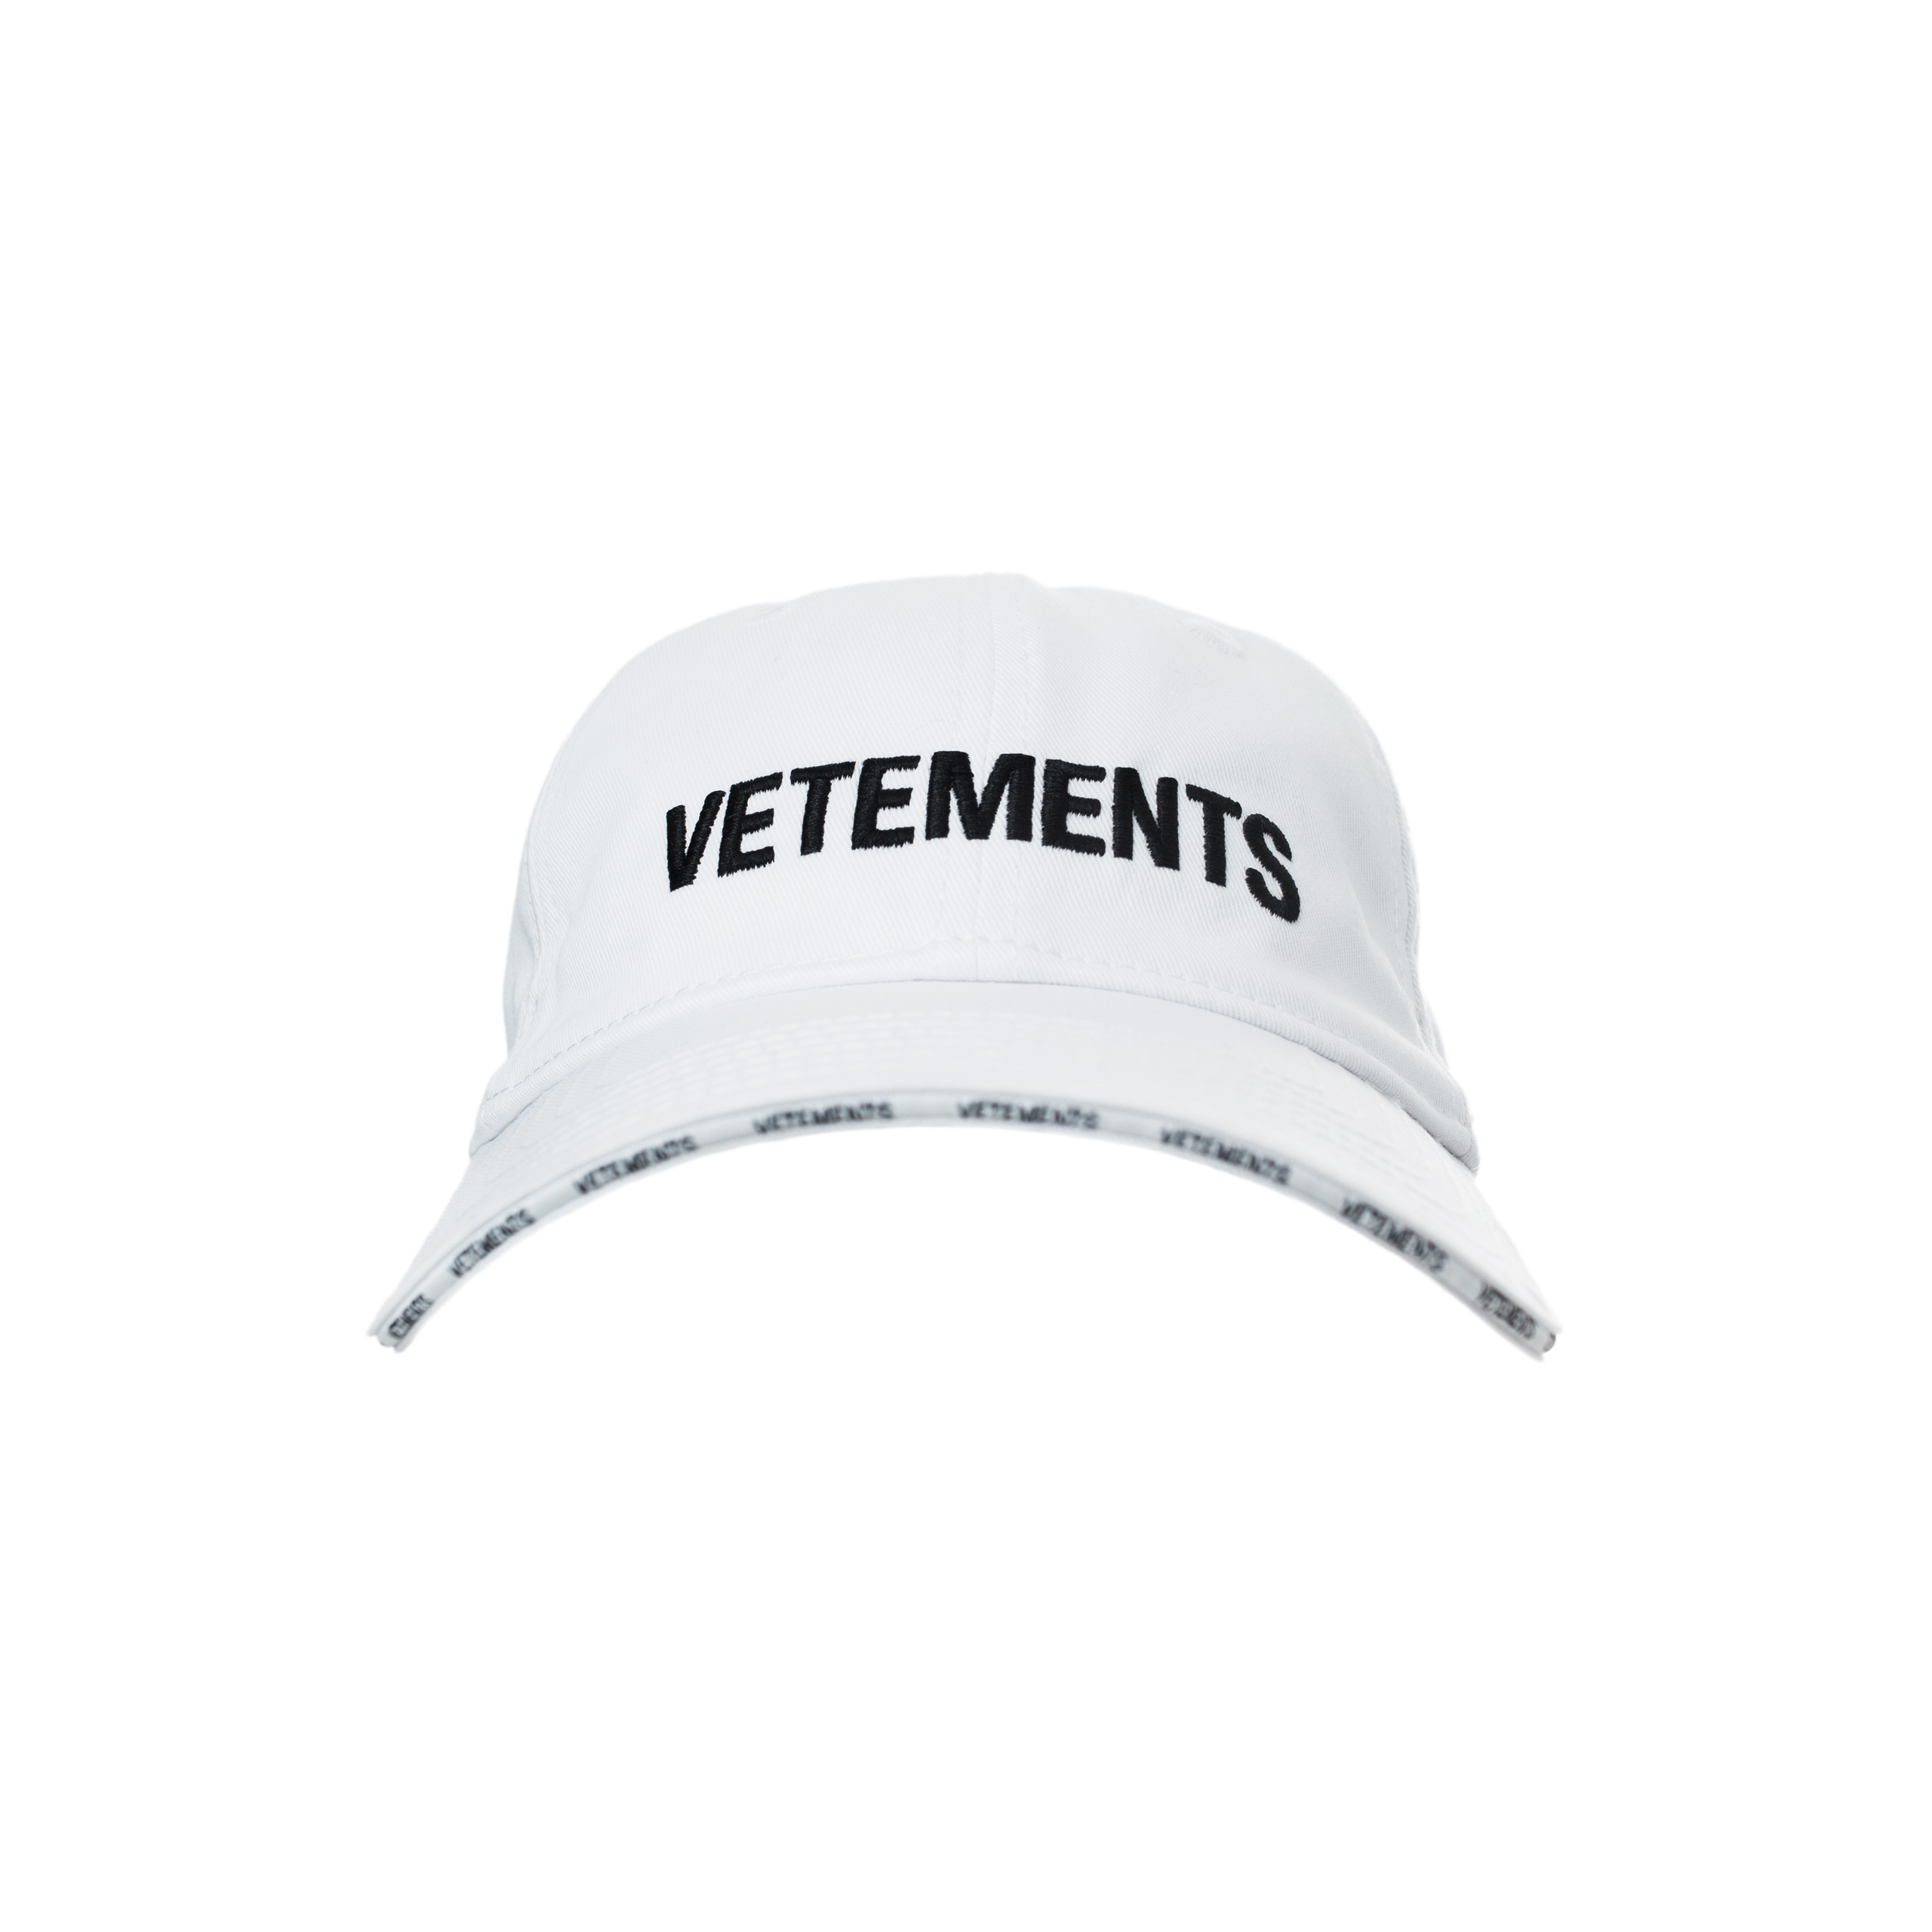 Buy VETEMENTS men white embroidered logo cap for $470 online 